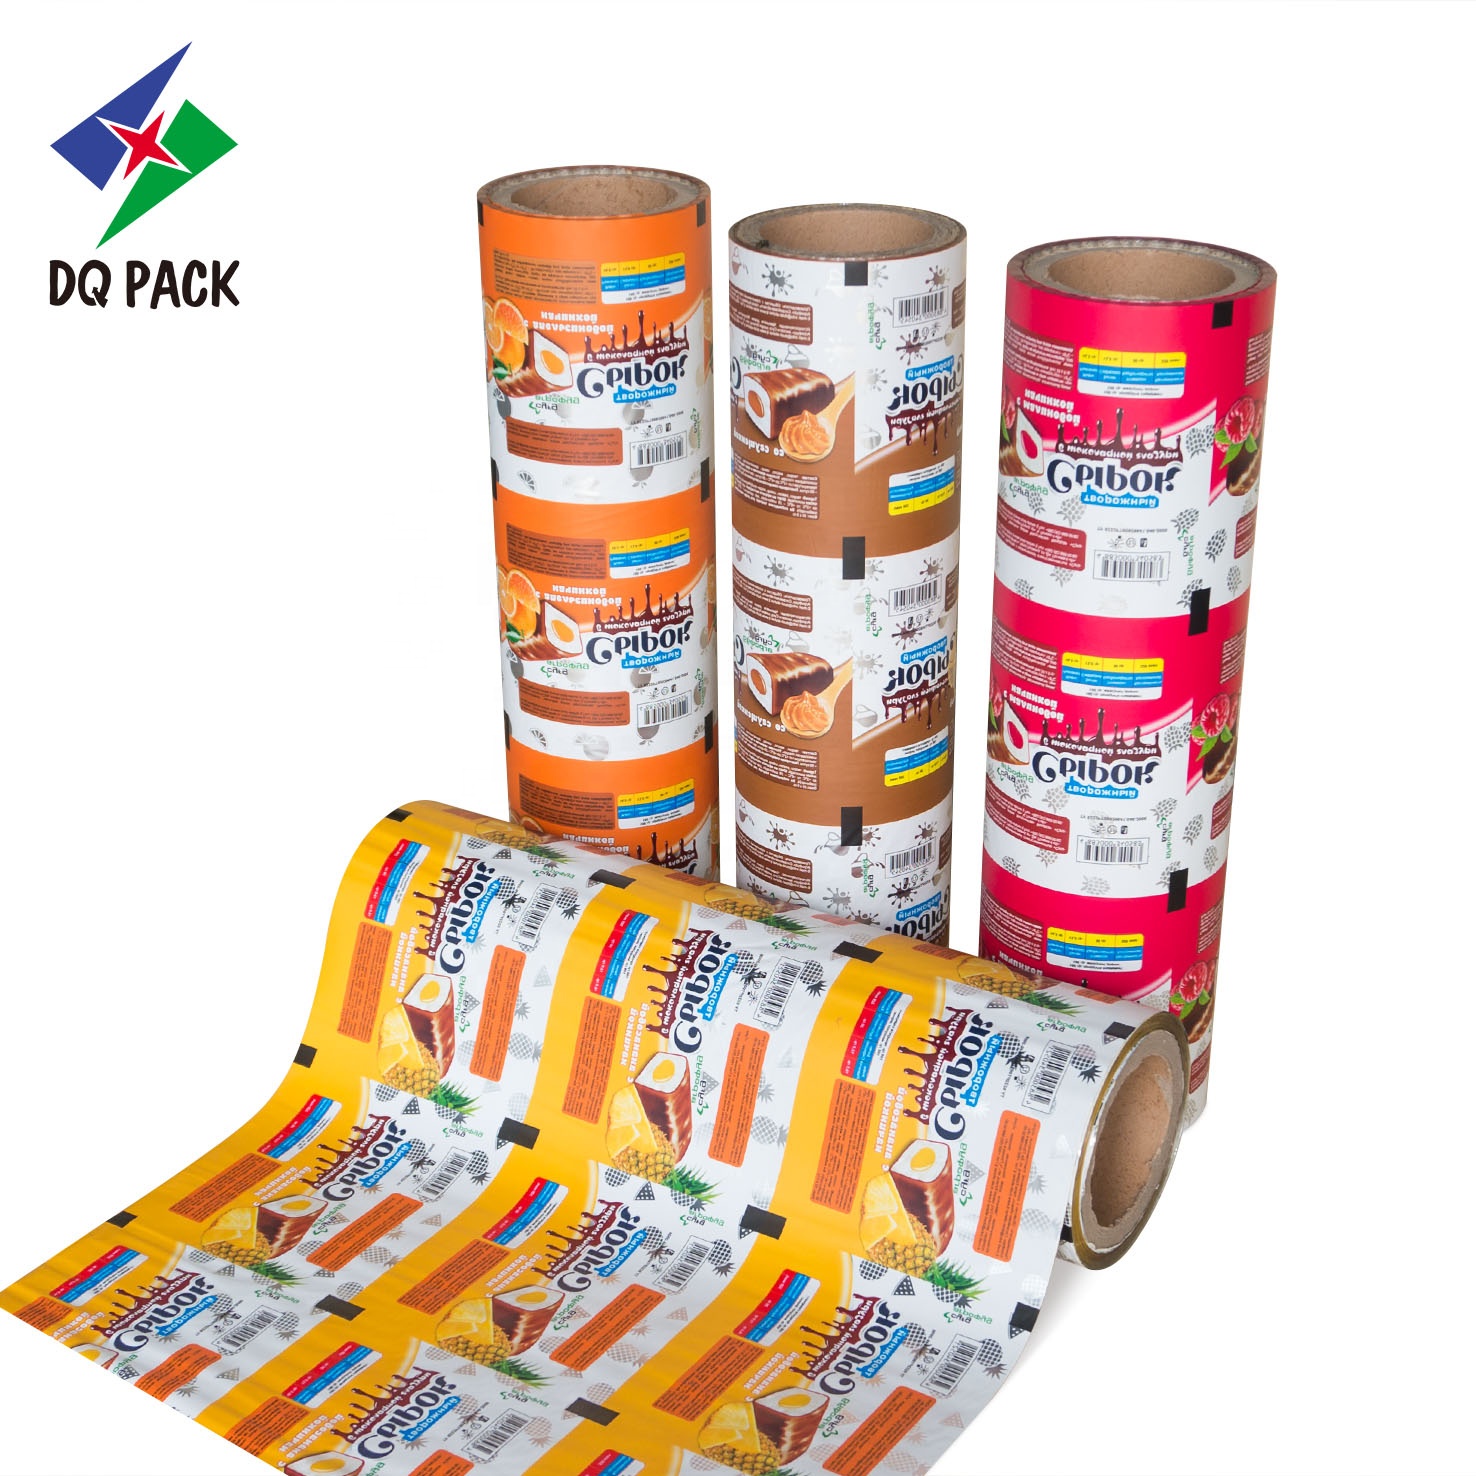 DQ PACK Wholesale Printed Beverage Packaging  Films Roll Food Snack Powder Packing Plastic Film Roll